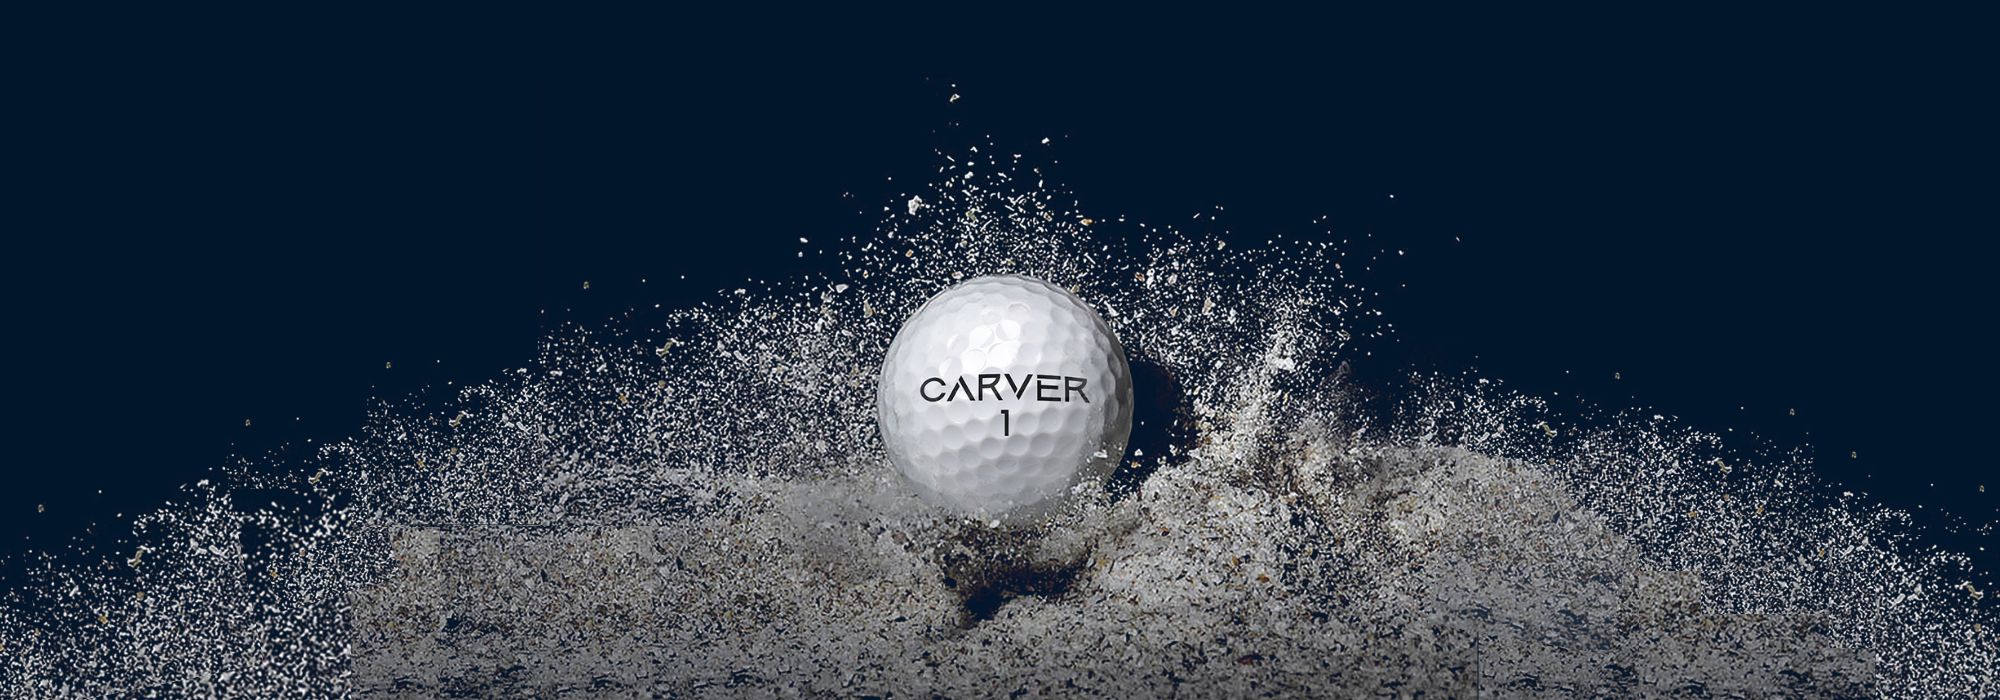 Carver Golf Ball 